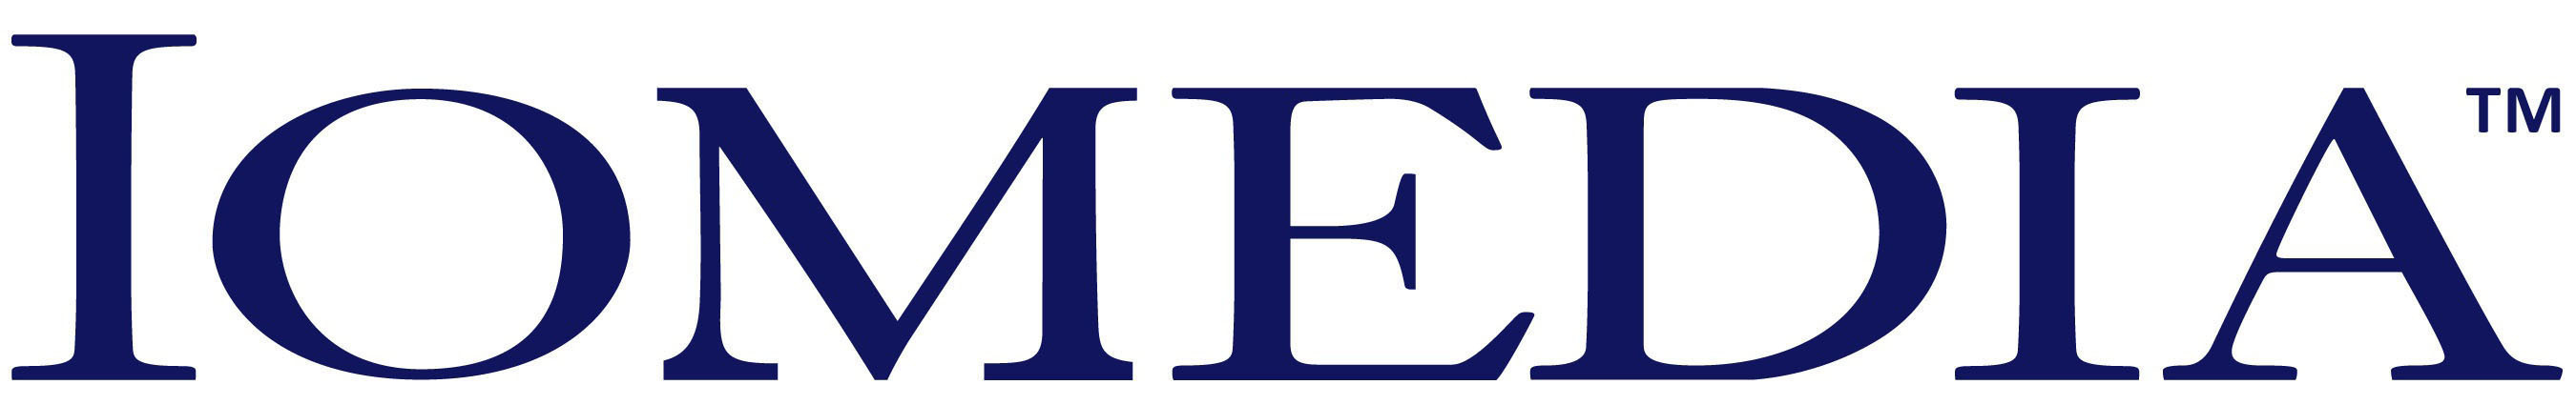 Iomedia Logo. (PRNewsFoto/Iomedia, Inc.) (PRNewsFoto/IOMEDIA, INC.)